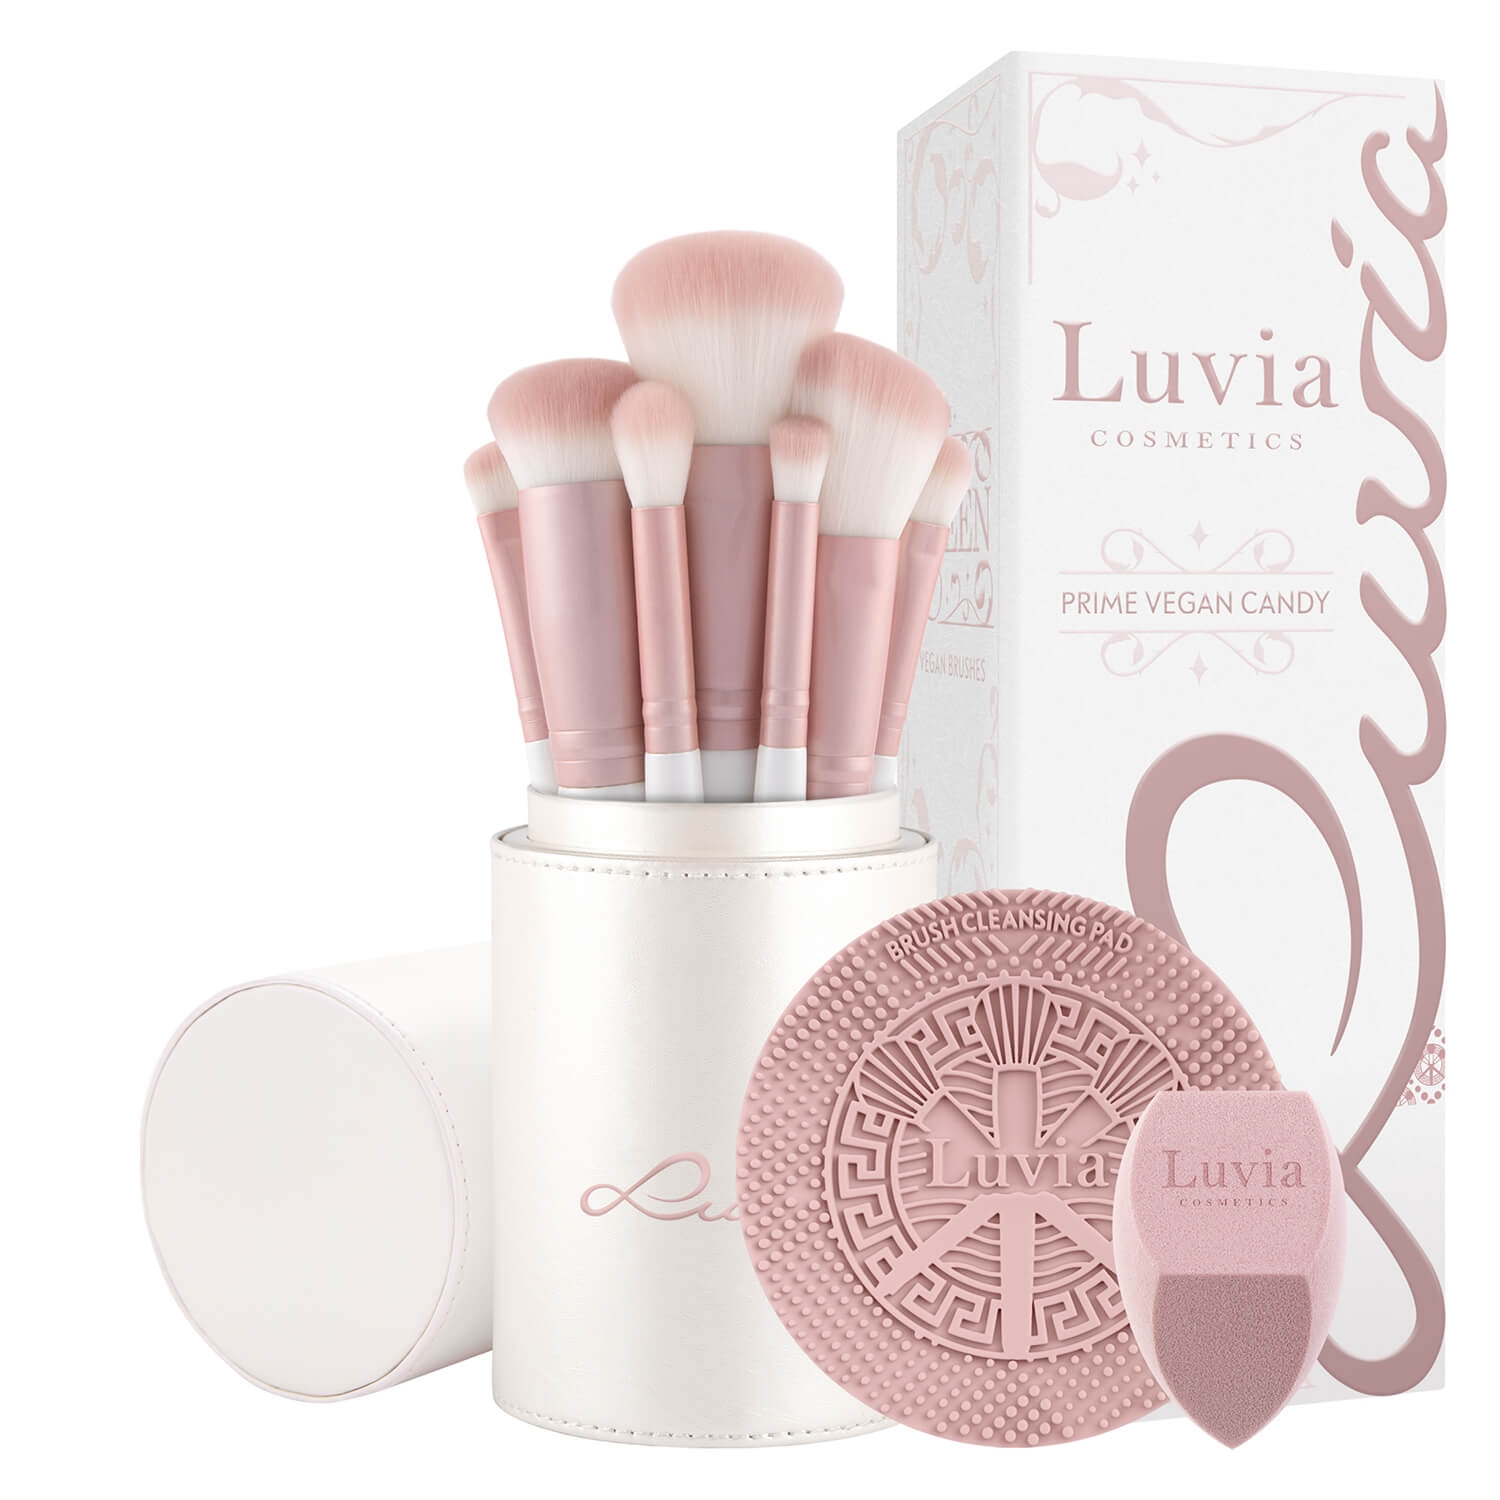 Produktbild von Luvia Cosmetics - Prime Vegan Candy